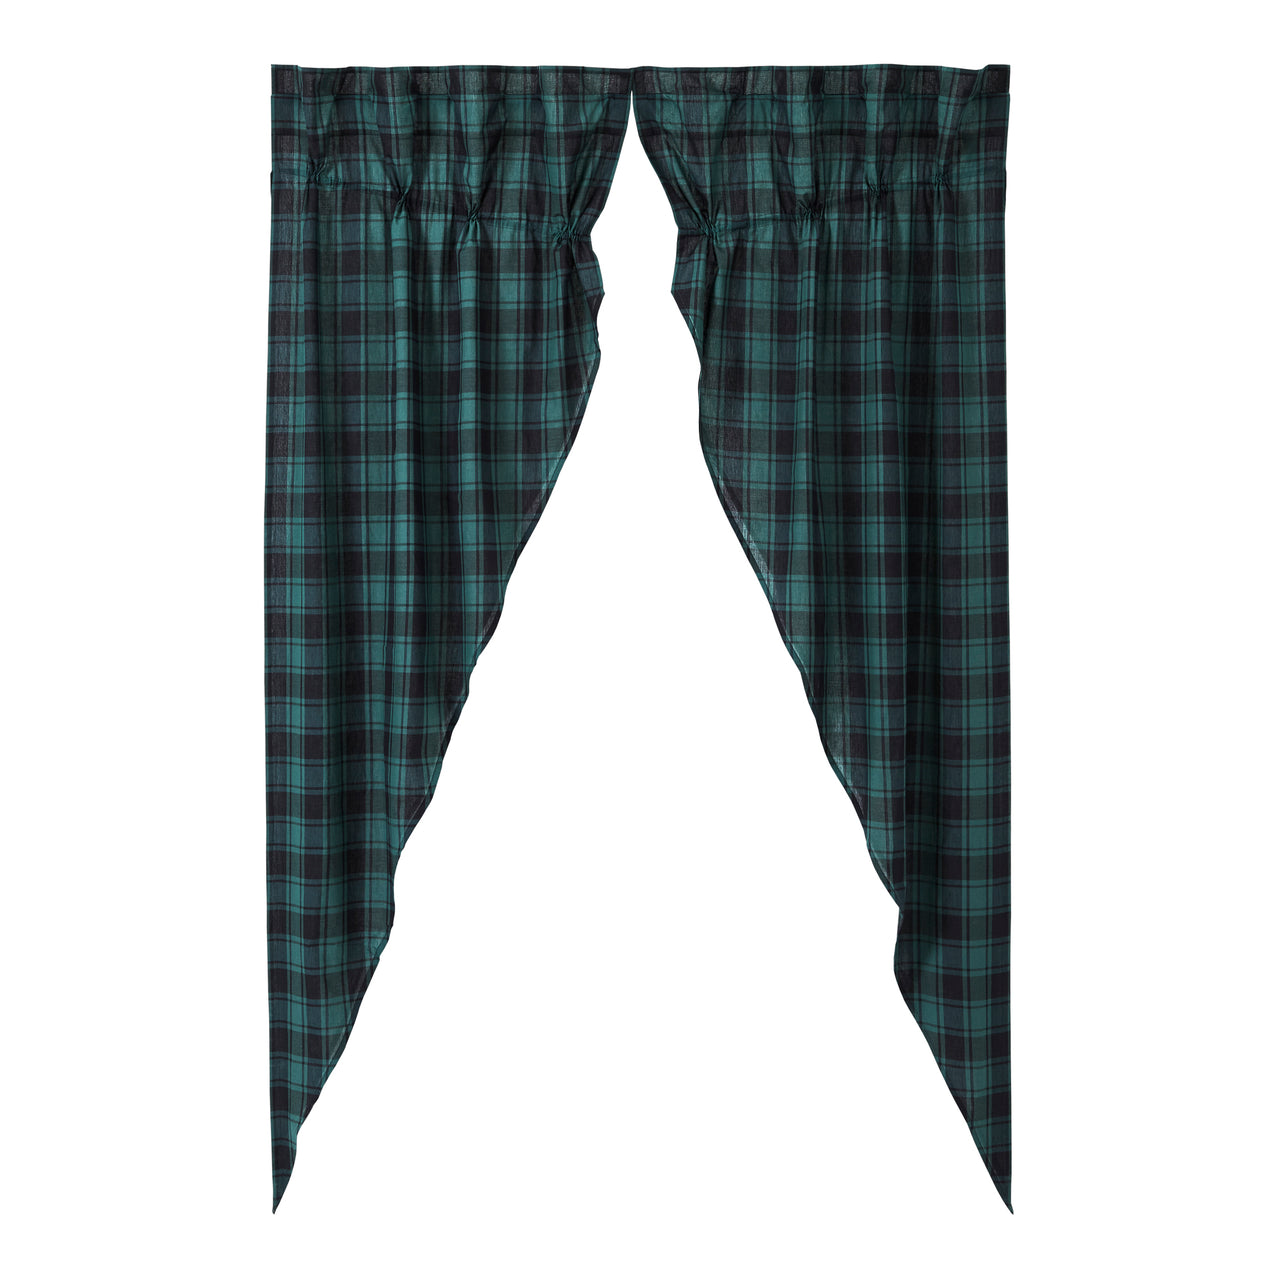 Pine Grove Prairie Long Panel Curtain Set of 2 84x36x18 VHC Brands